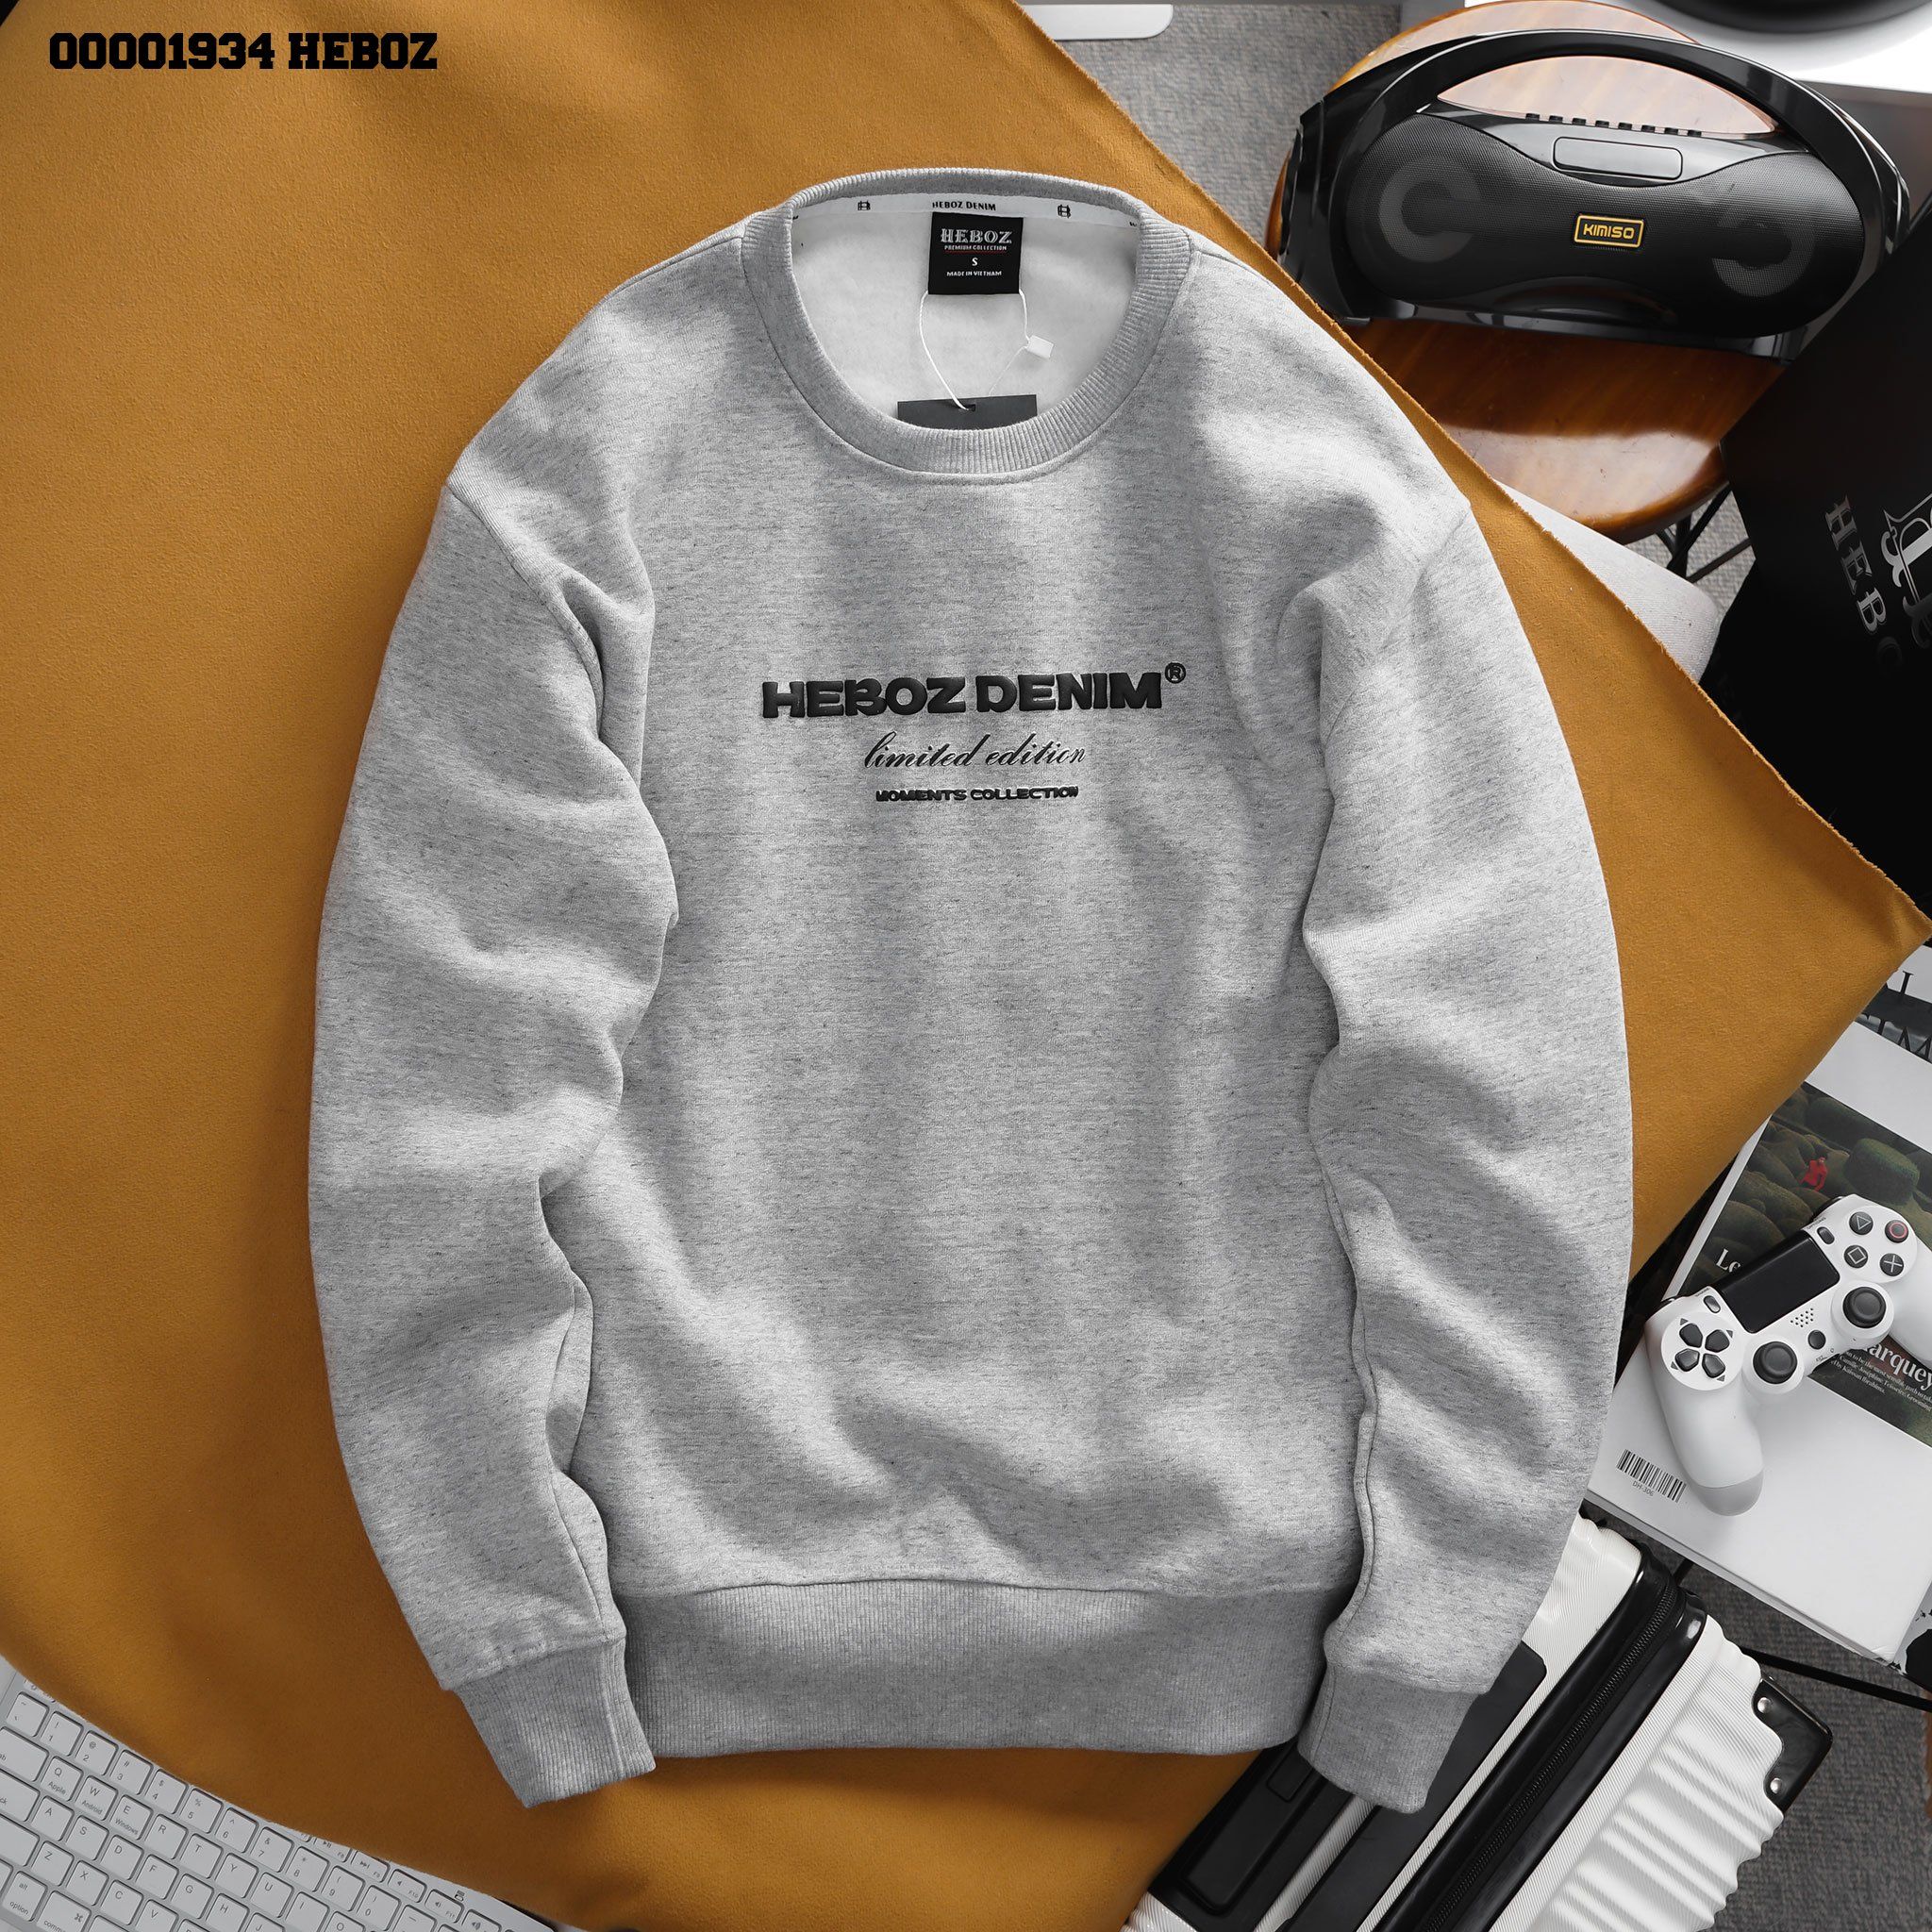  Áo sweater nỉ bông limited Heboz 3M - 00001934 